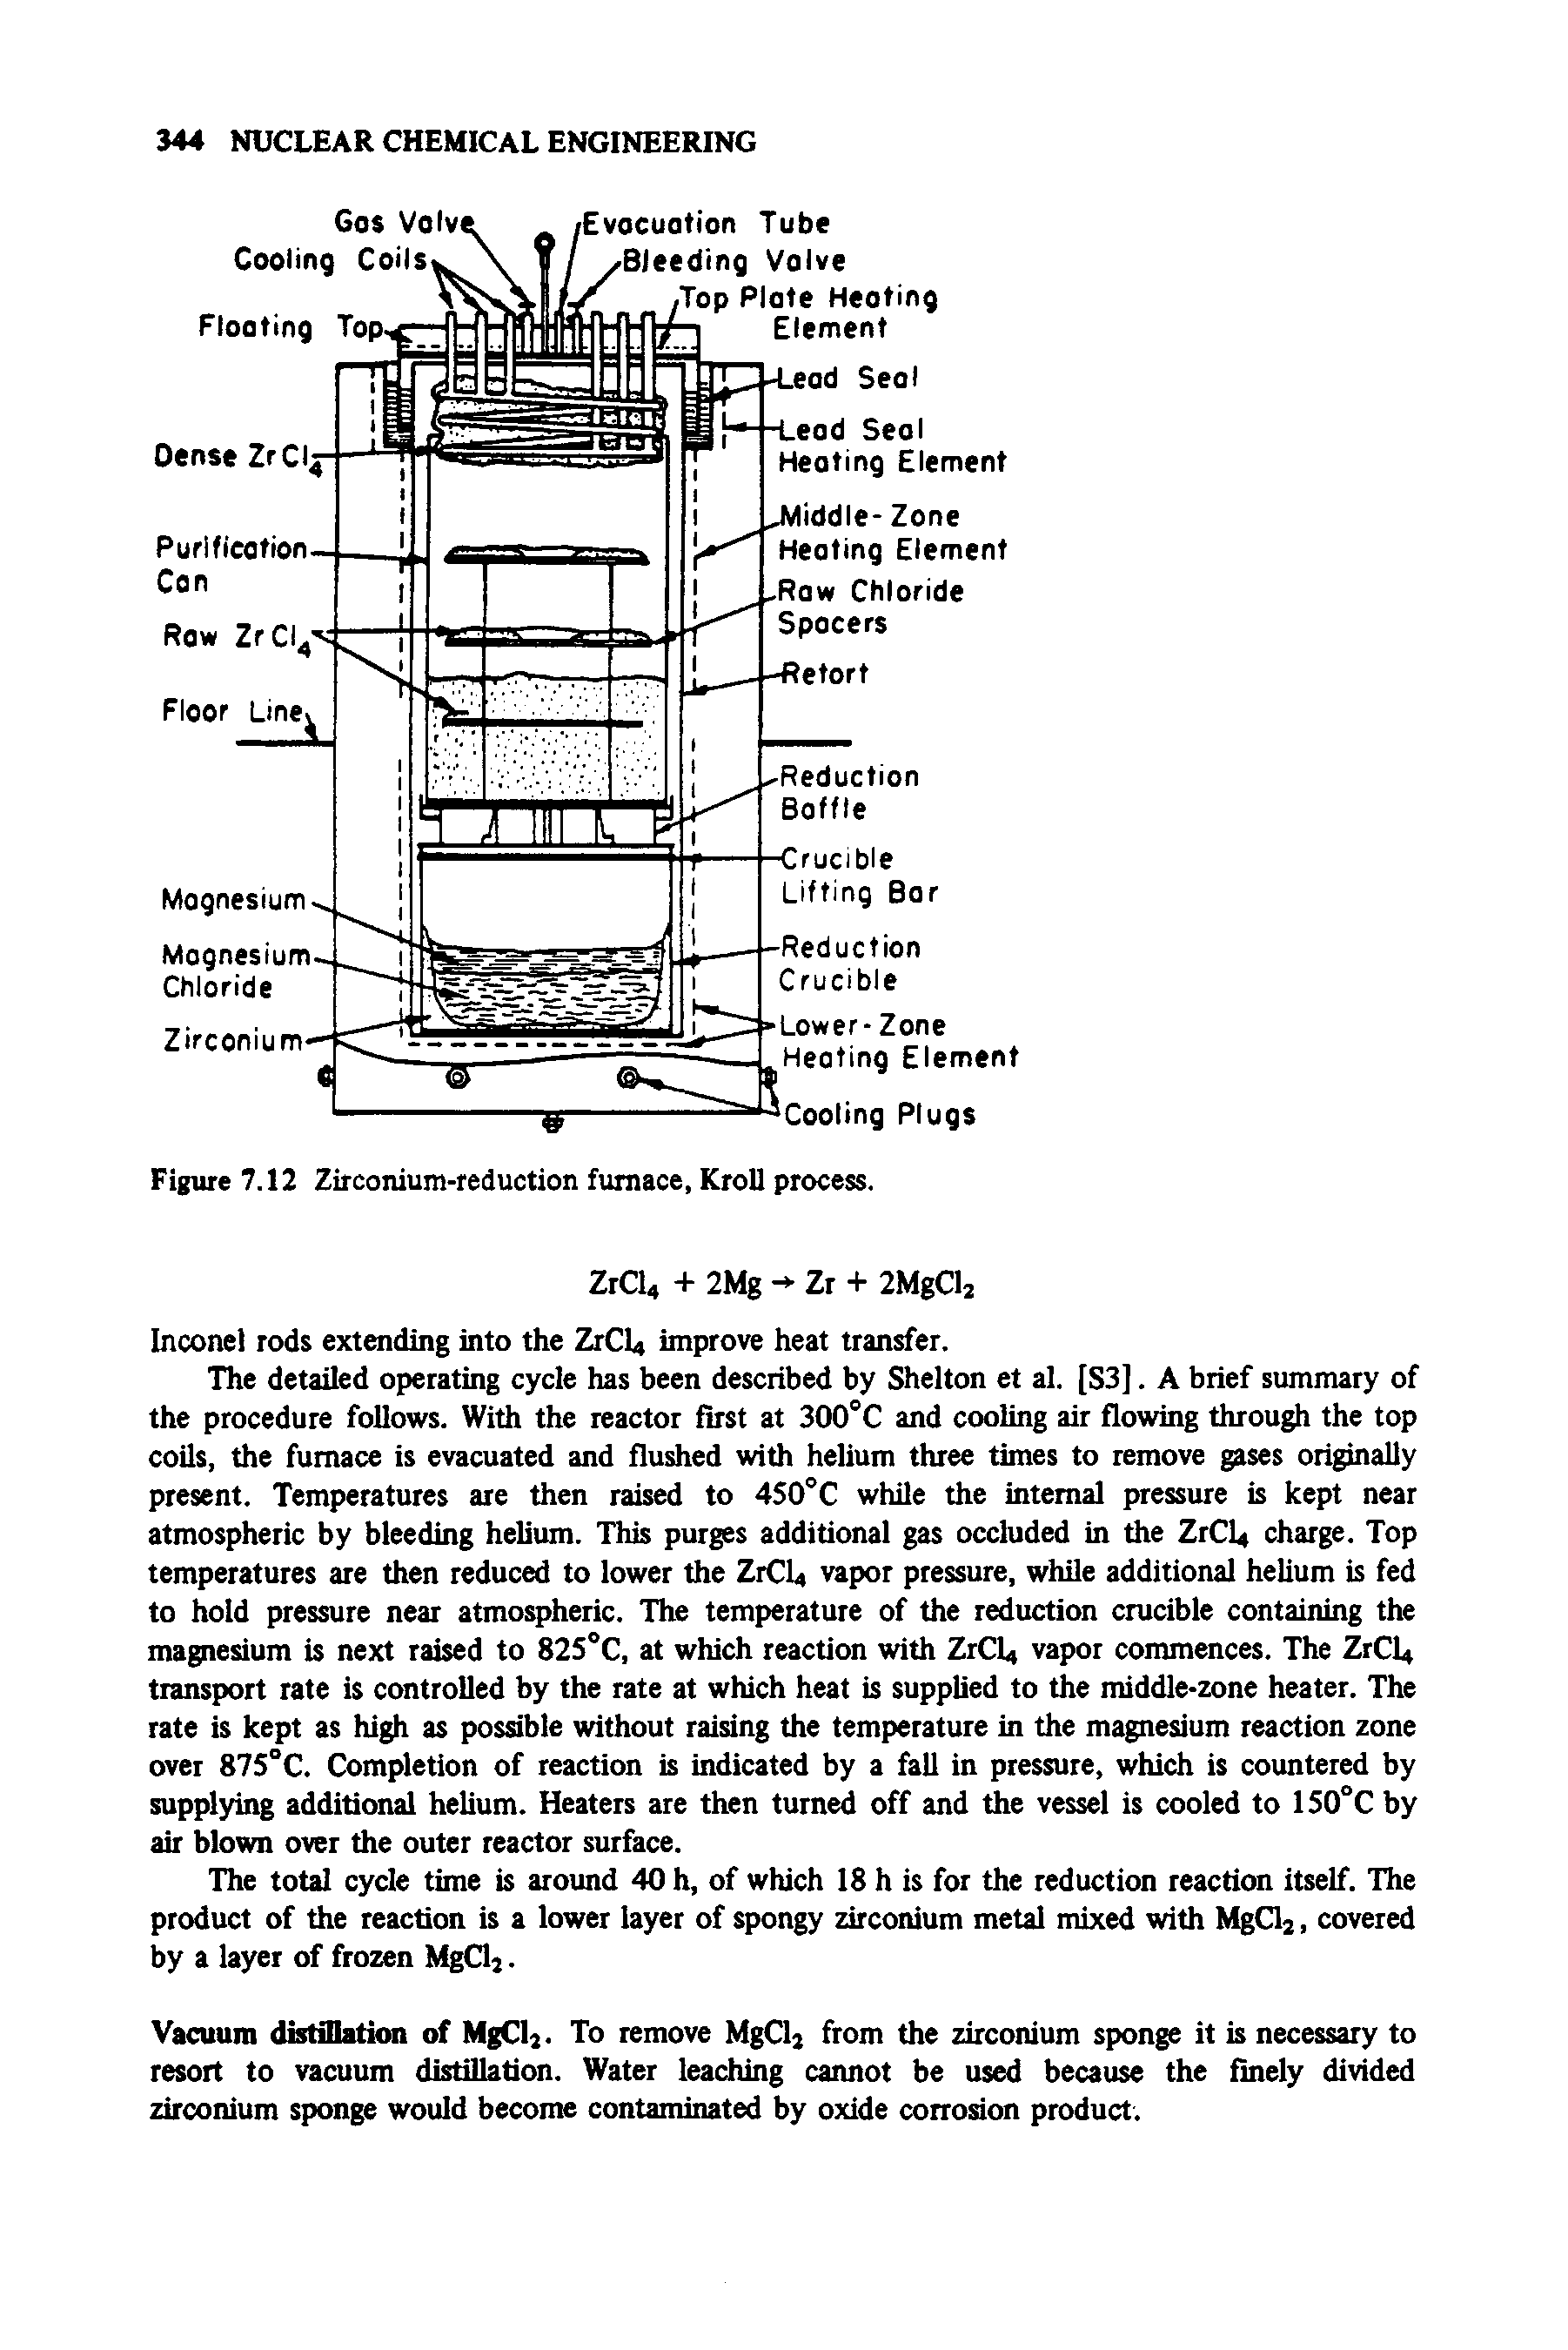 Figure 7.12 Zirconium-reduction furnace, KroU process.